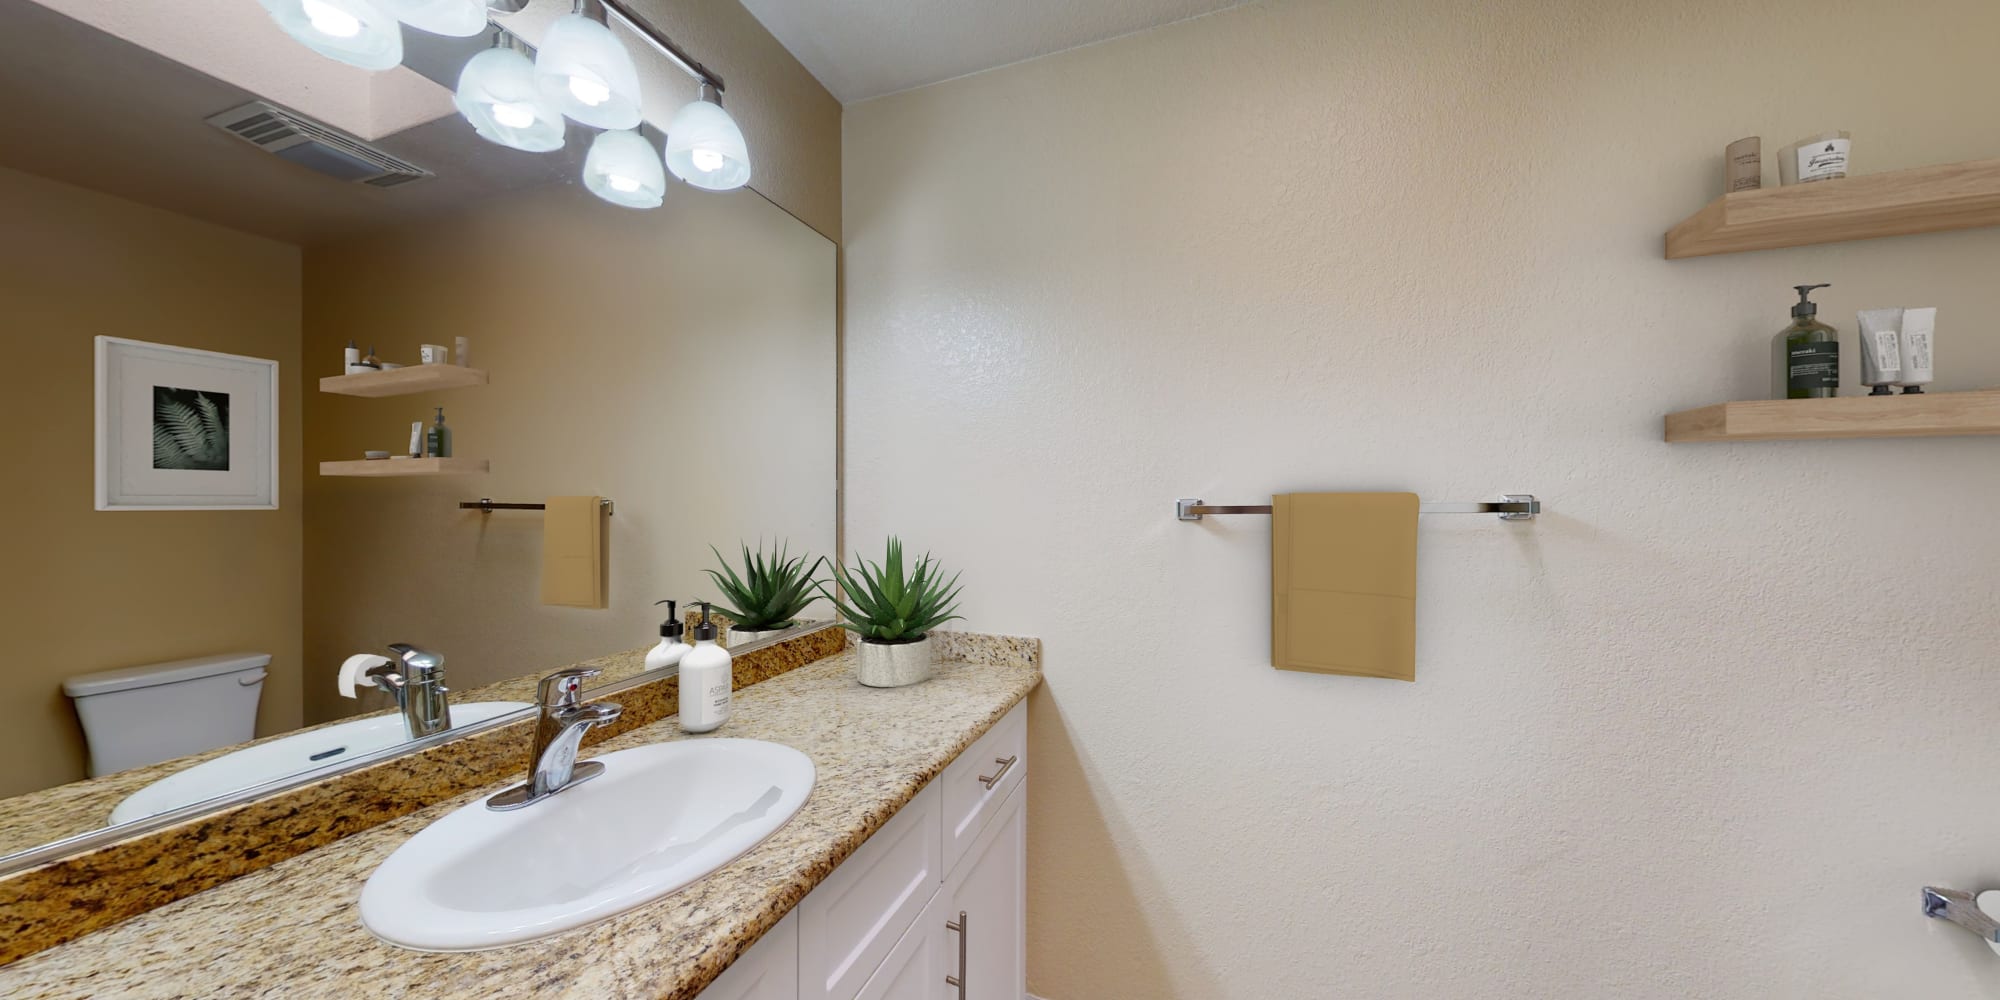 Two-bedroom apartment's bathroom at Valley Plaza Villages in Pleasanton, California